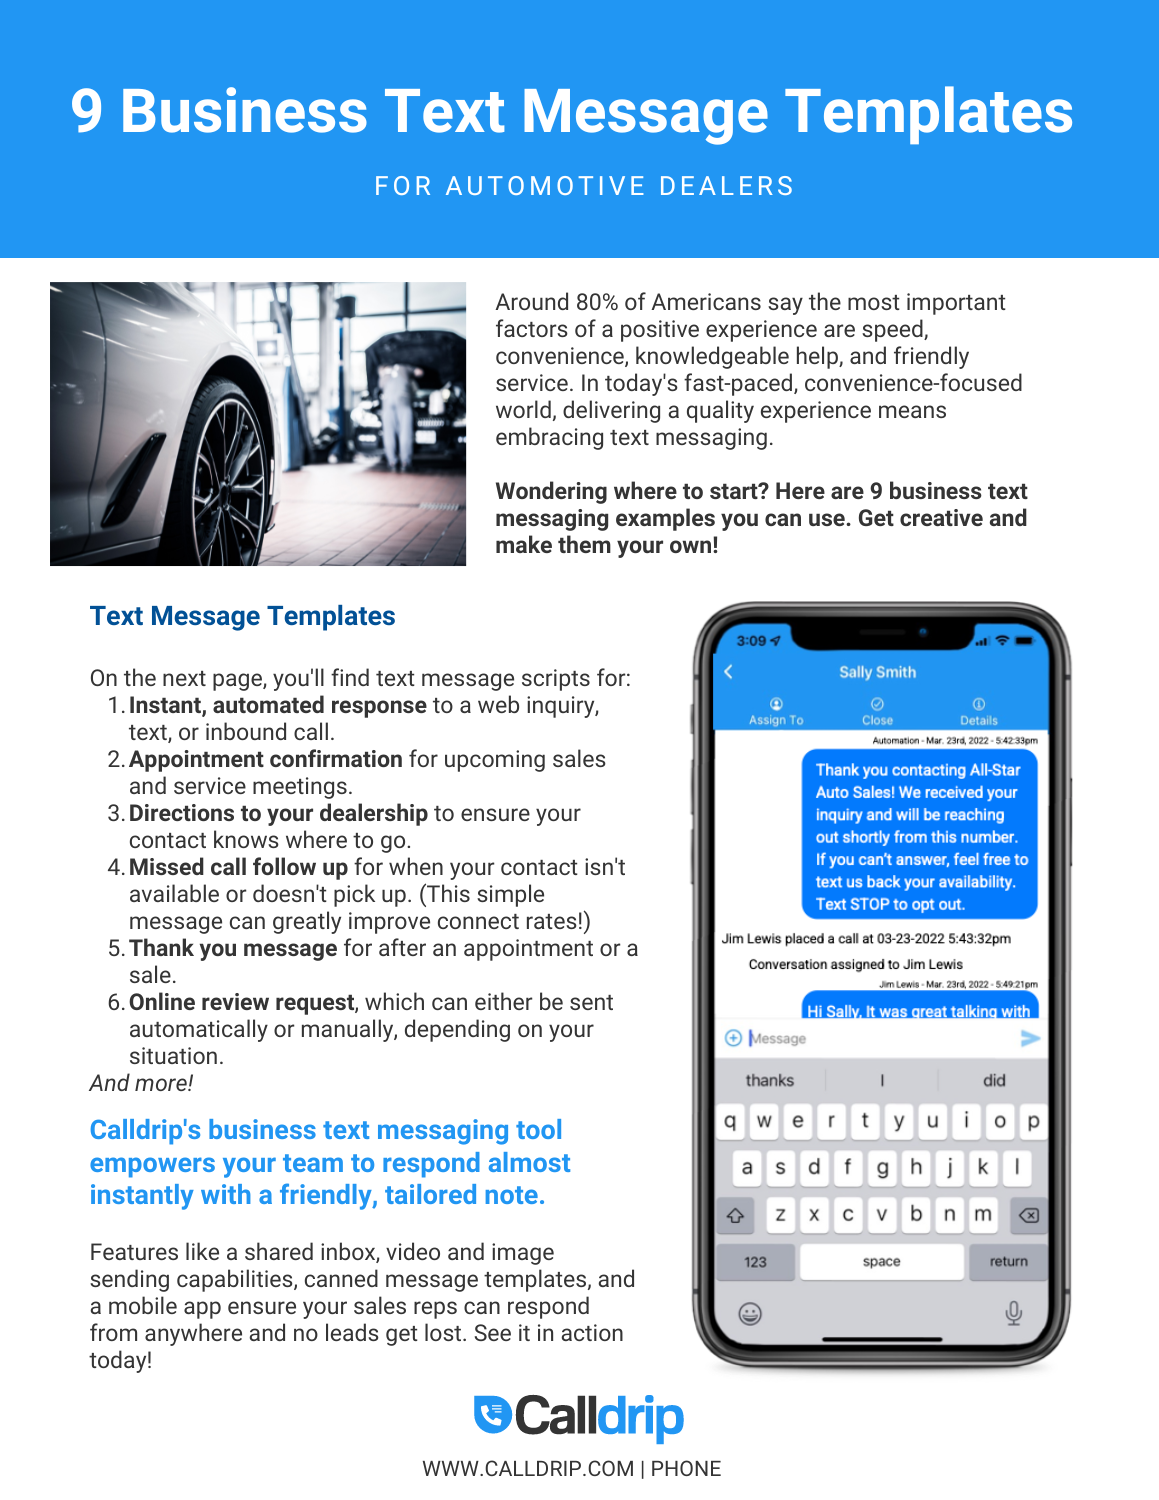 Business Text Messaging Examples - Calldrip